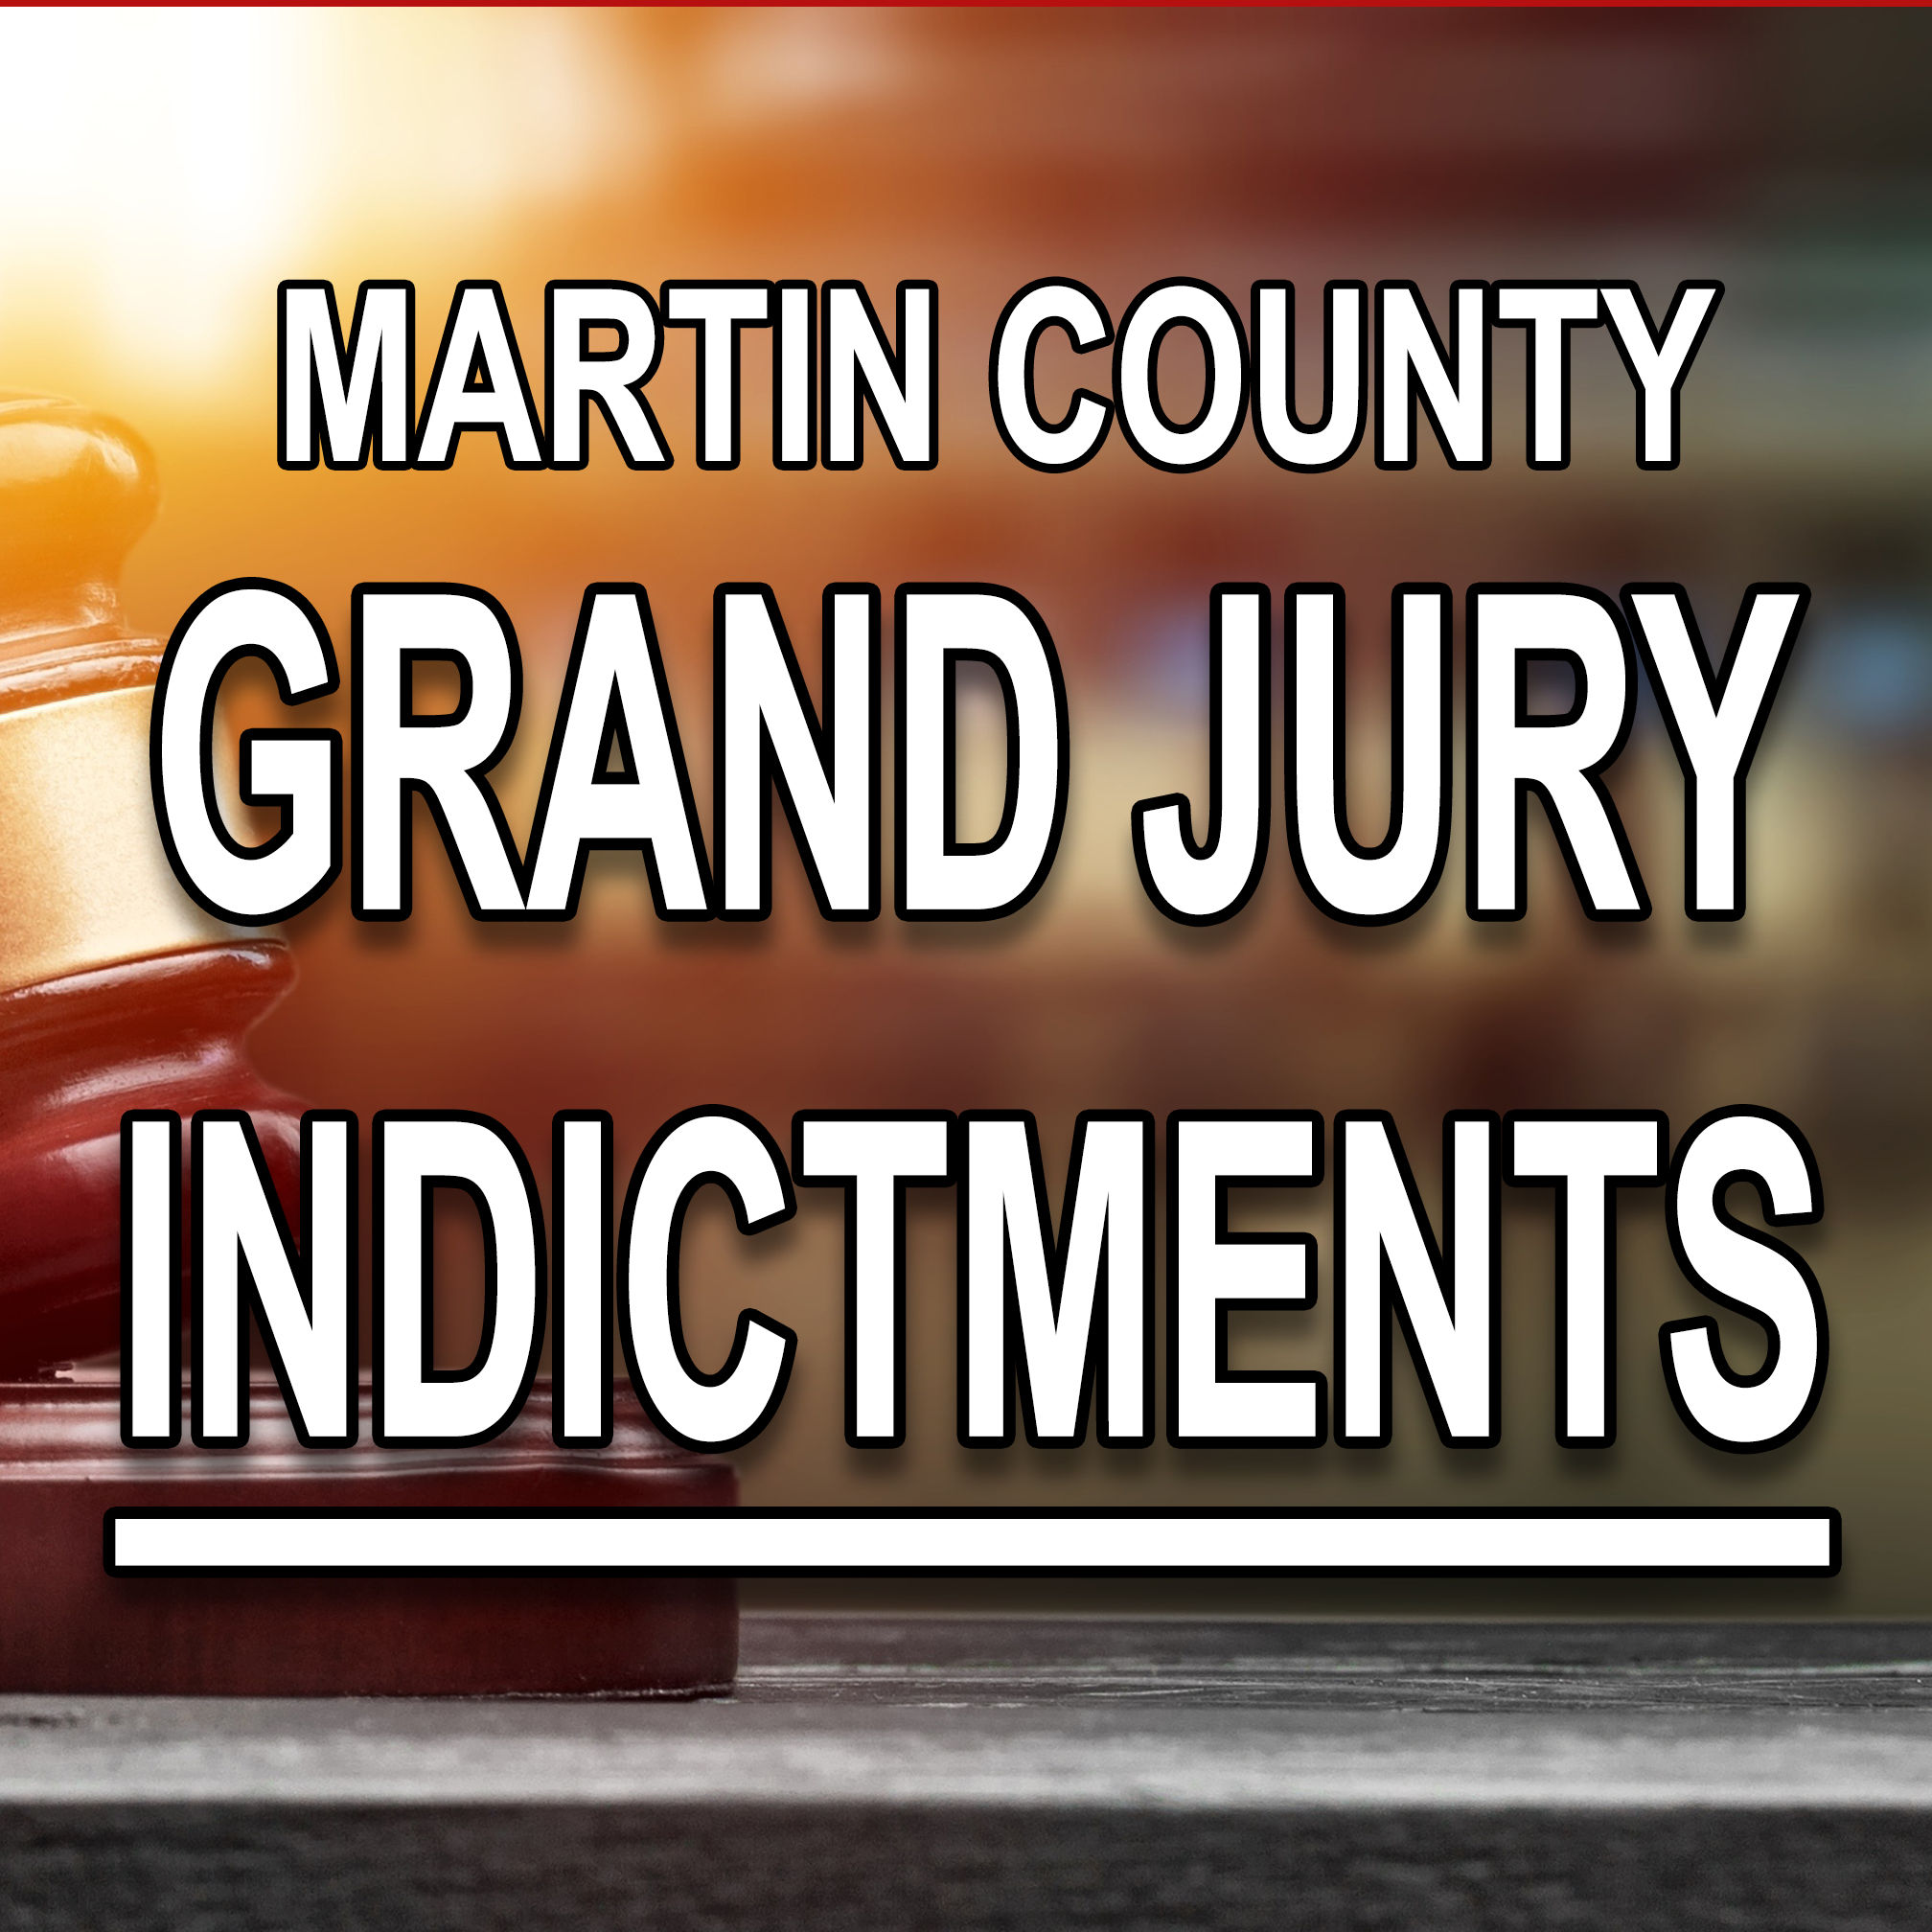 Rape, arson, theft, child abuse highlight Martin County grand jury indictments